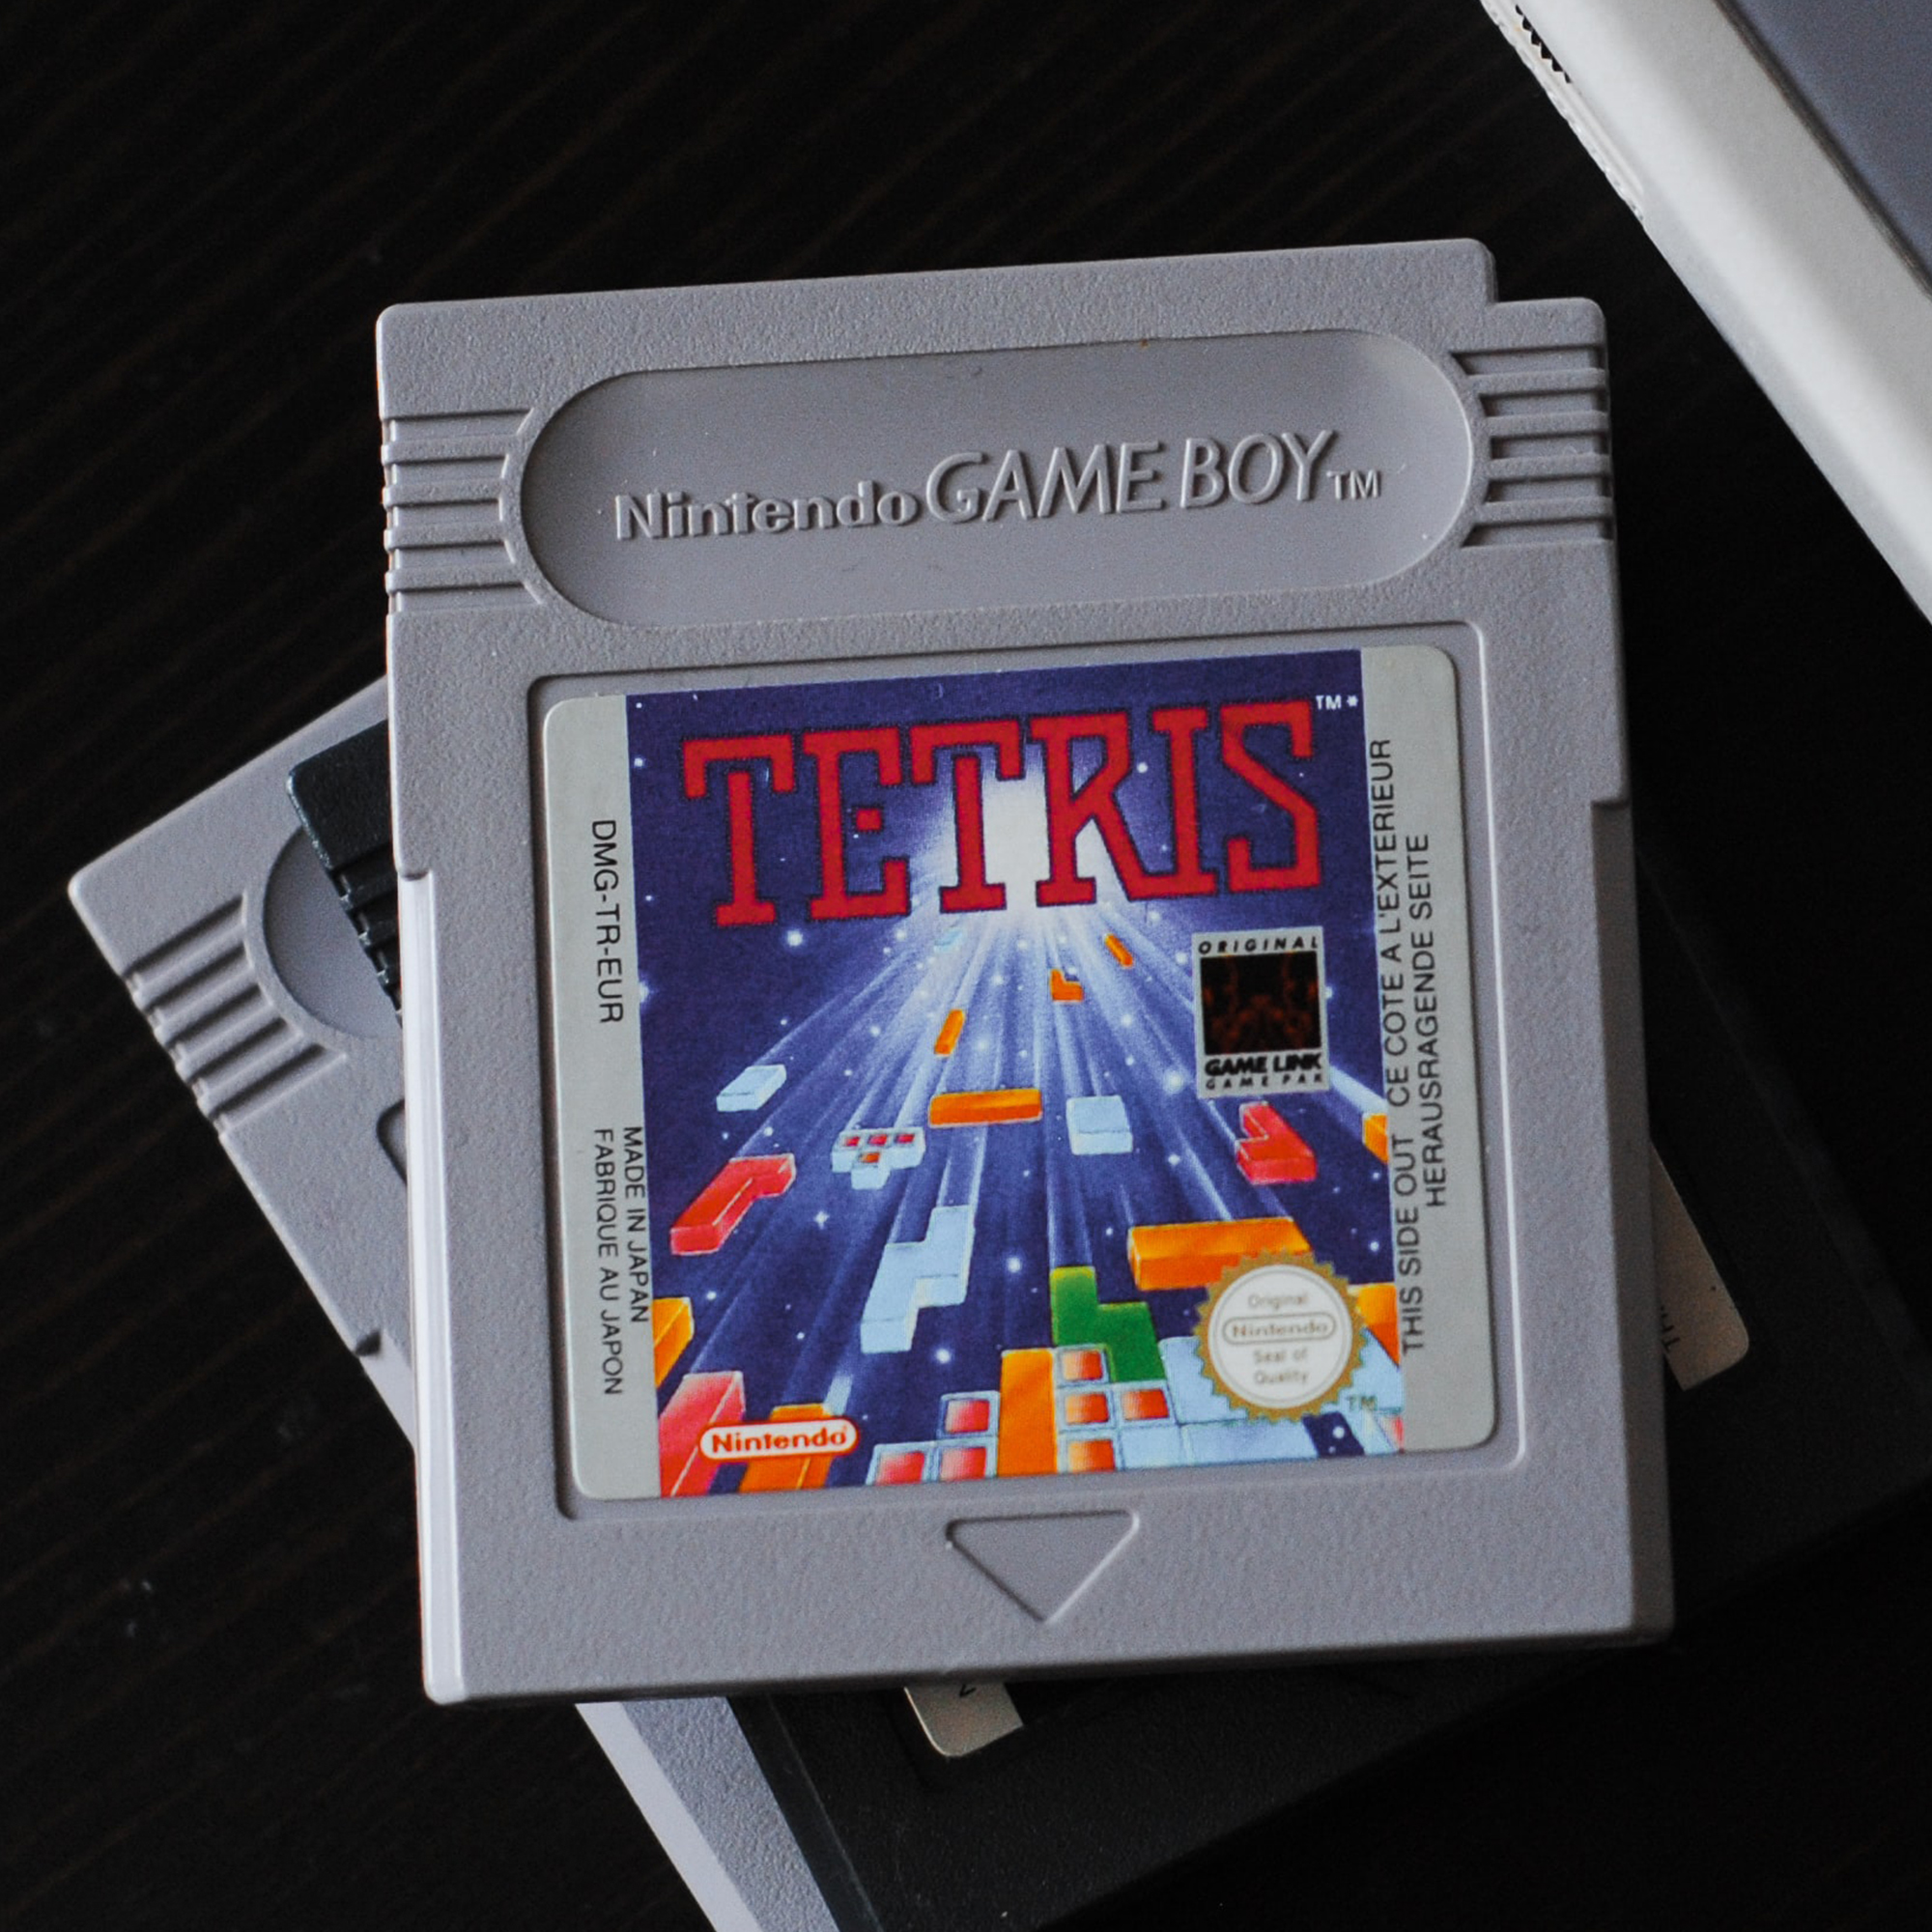 Nintendo Gameboy Tetris cartridges. | Source: Unsplash